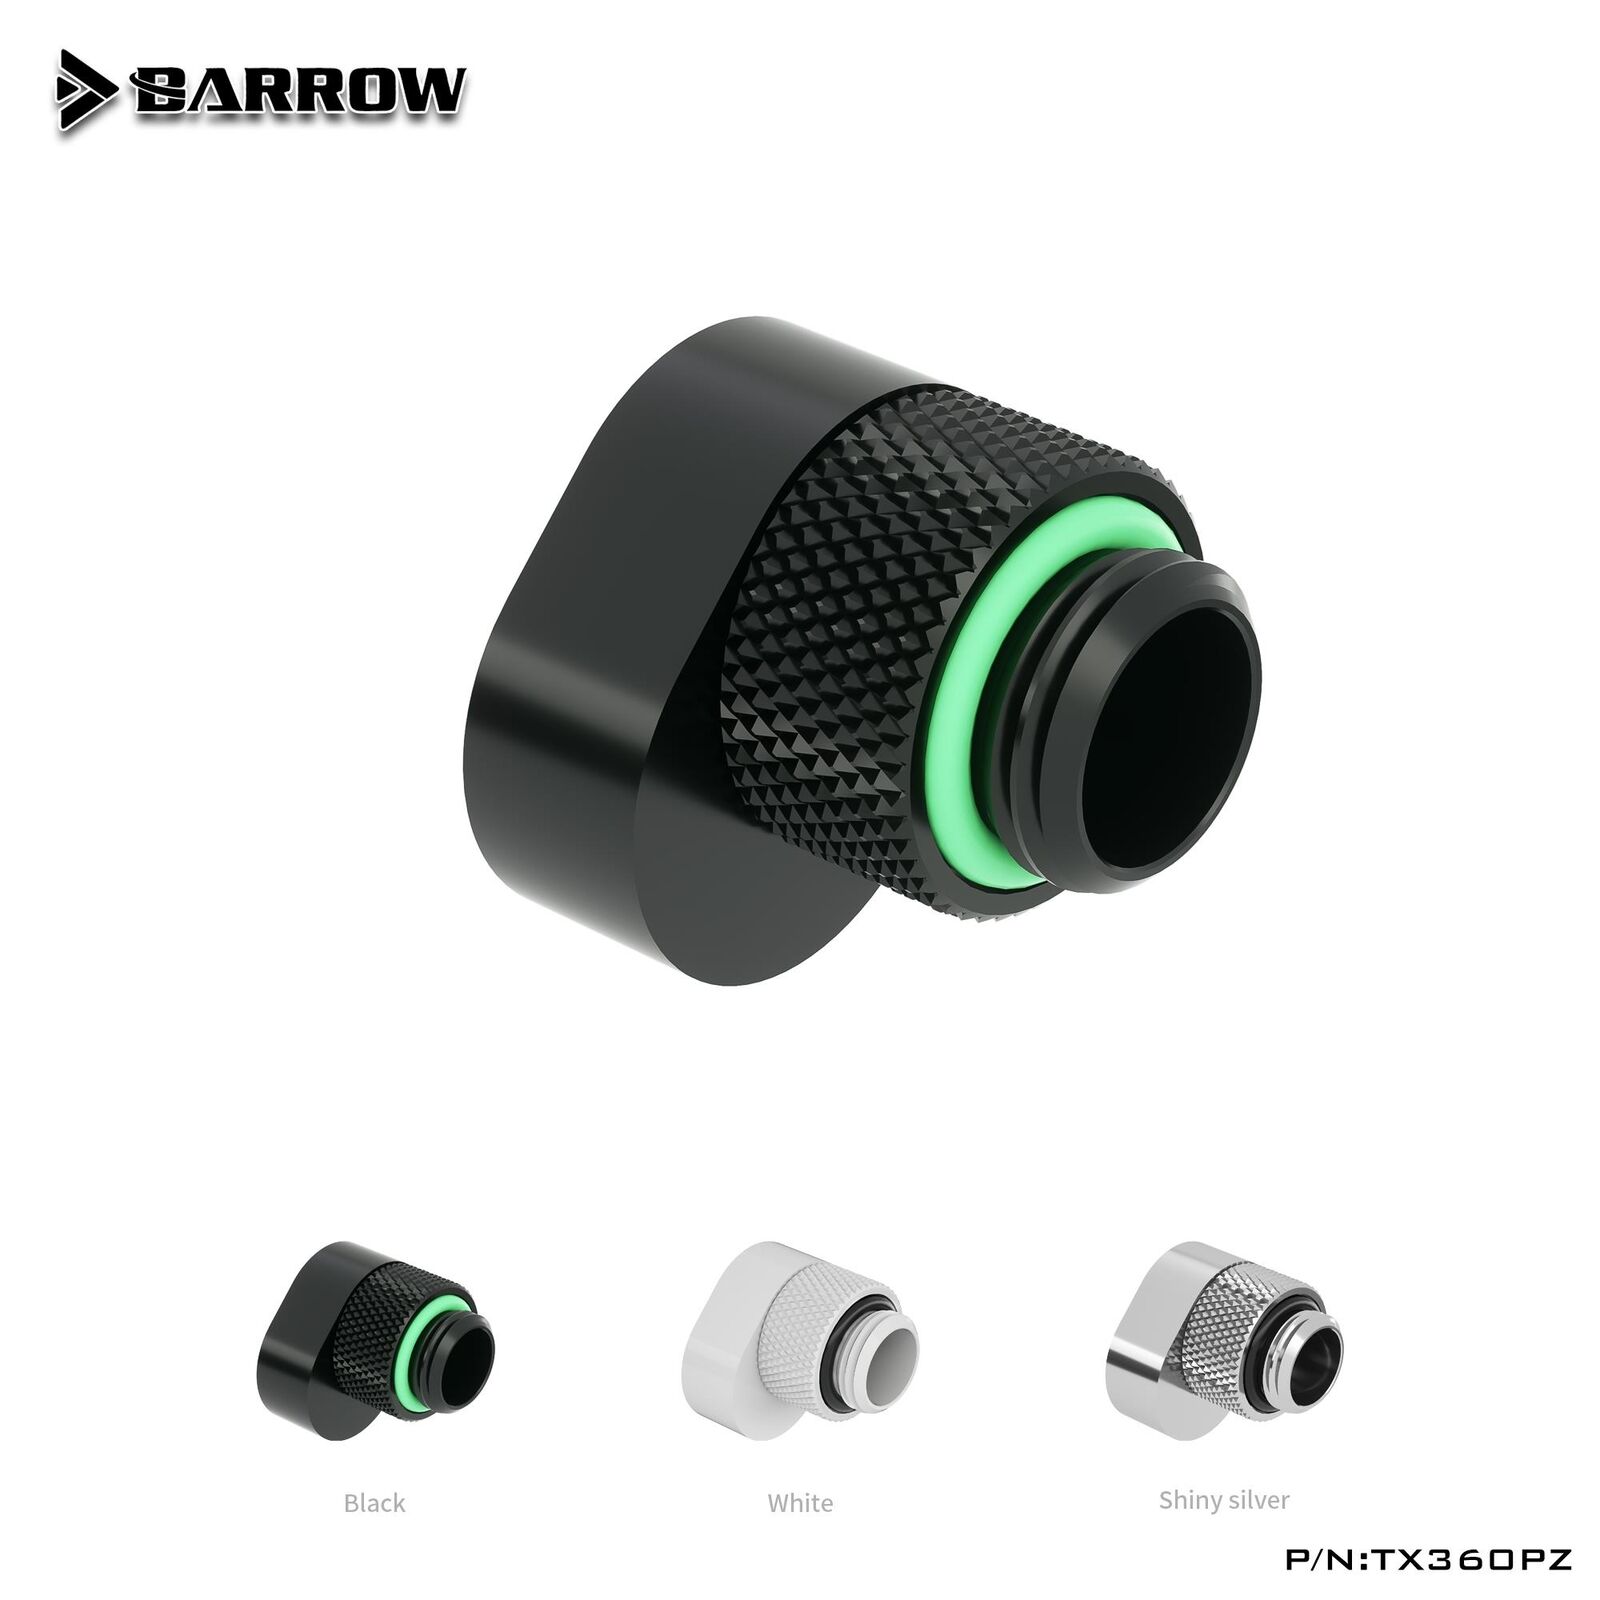 Barrow TX360PZ G-1/4 Rotate Offset Adjust Fitting